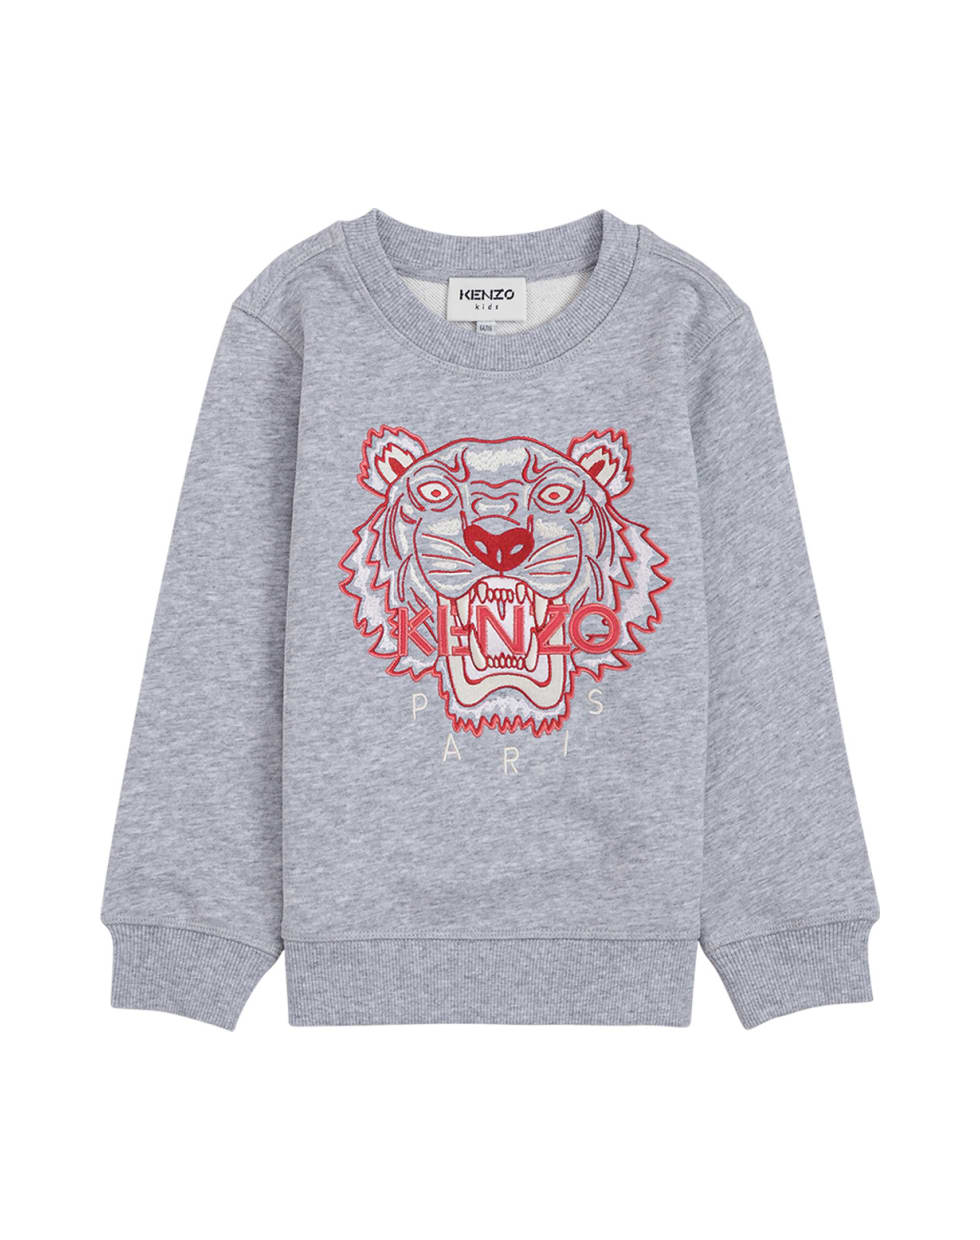 Kenzo Kids Grey Cotton Sweatshirt With Tiger Print - Grigio